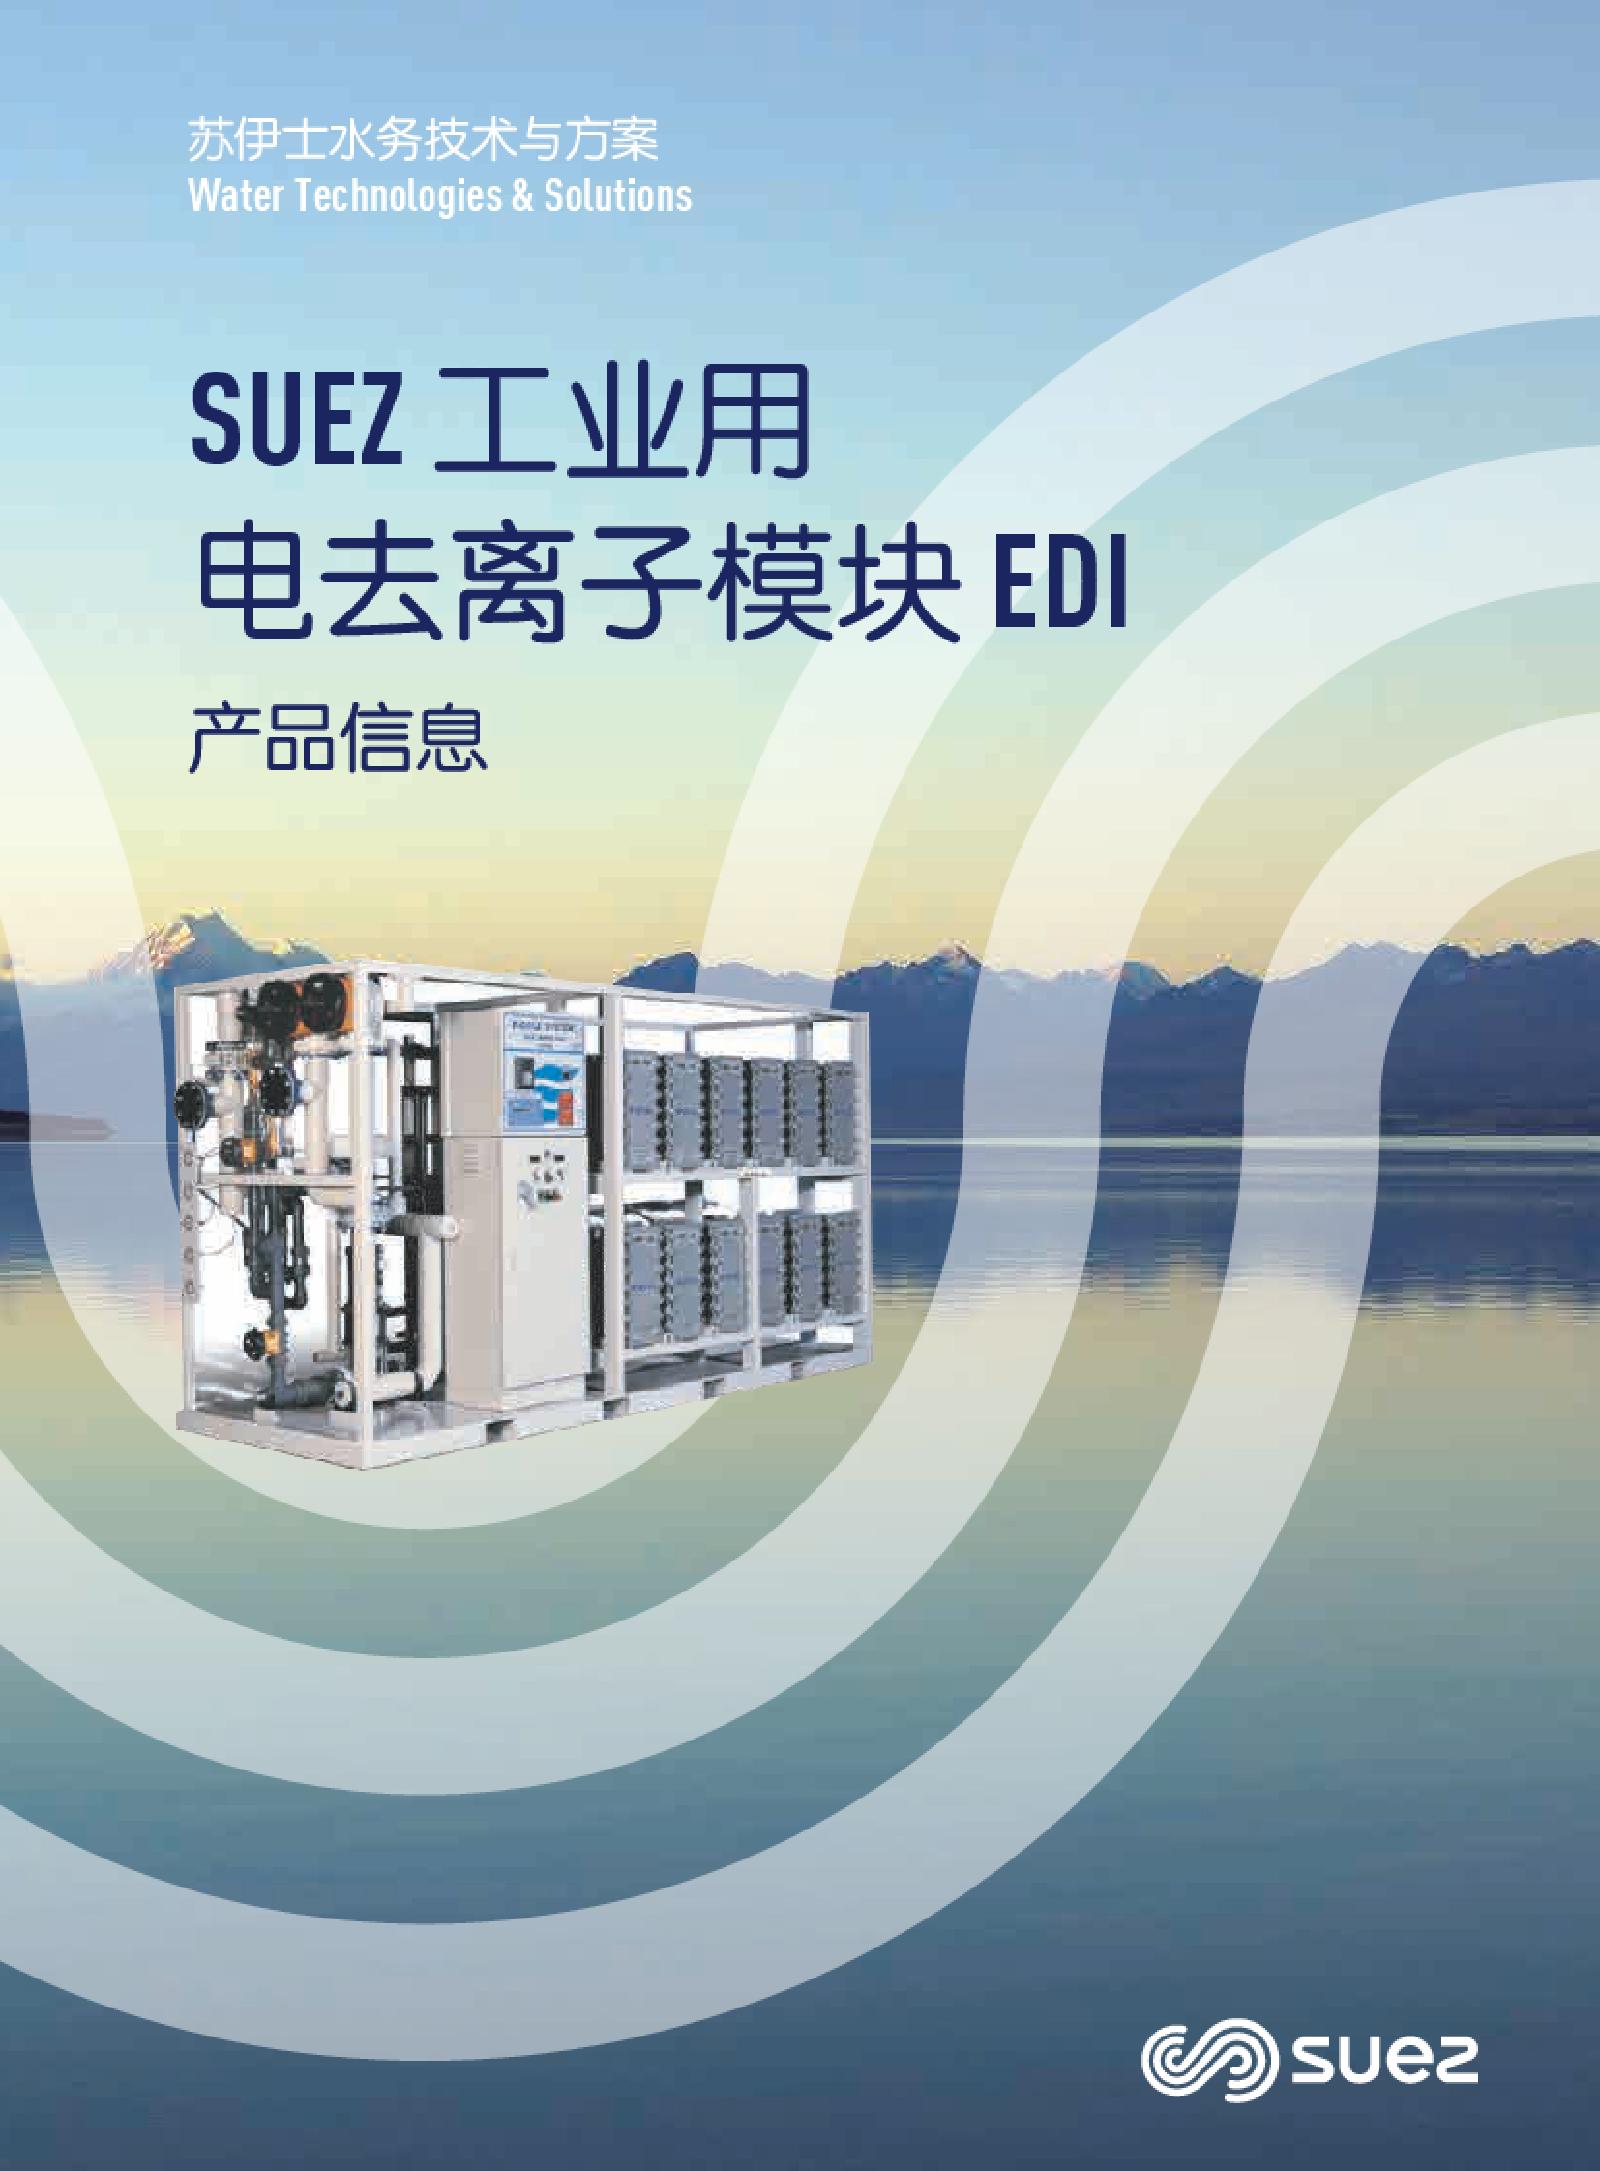 SUEZ工业用电去离子模块EDI产品信息